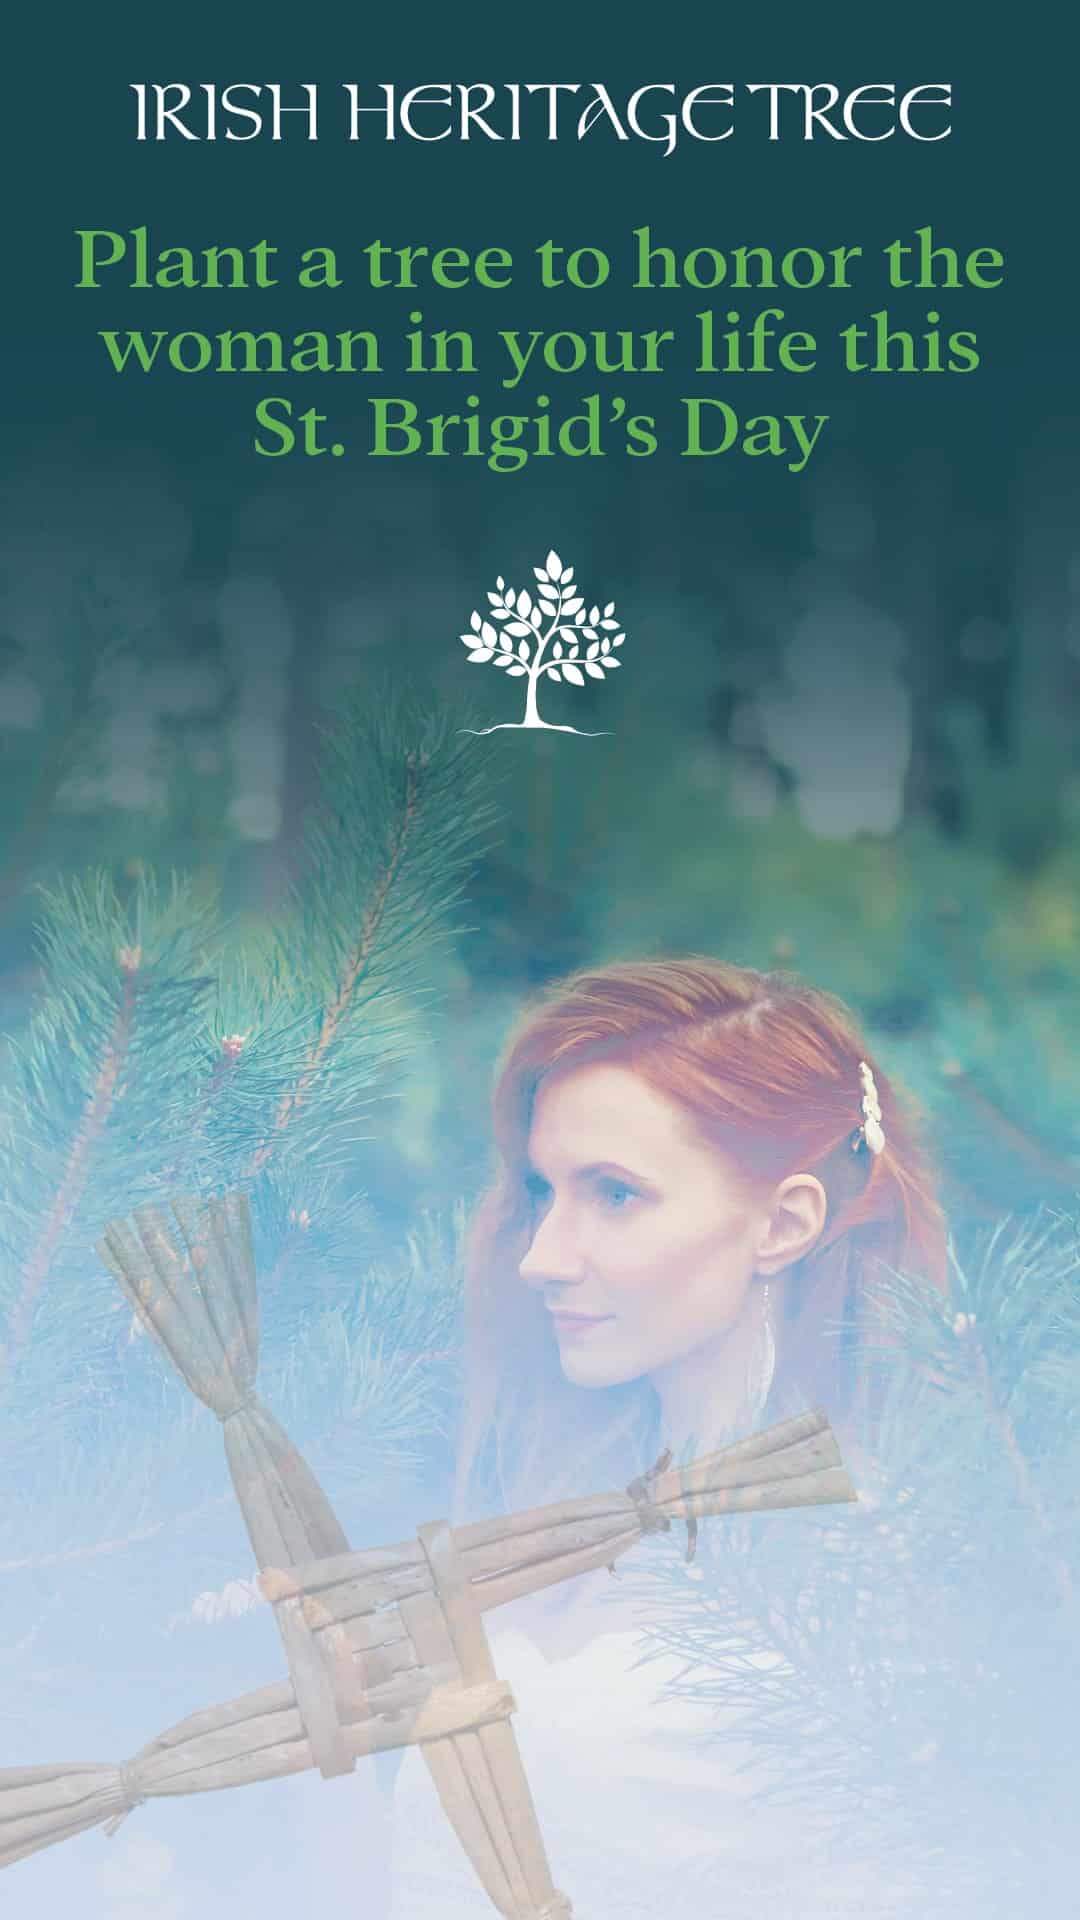 Irish Heritage Tree - St. Brigid's Day